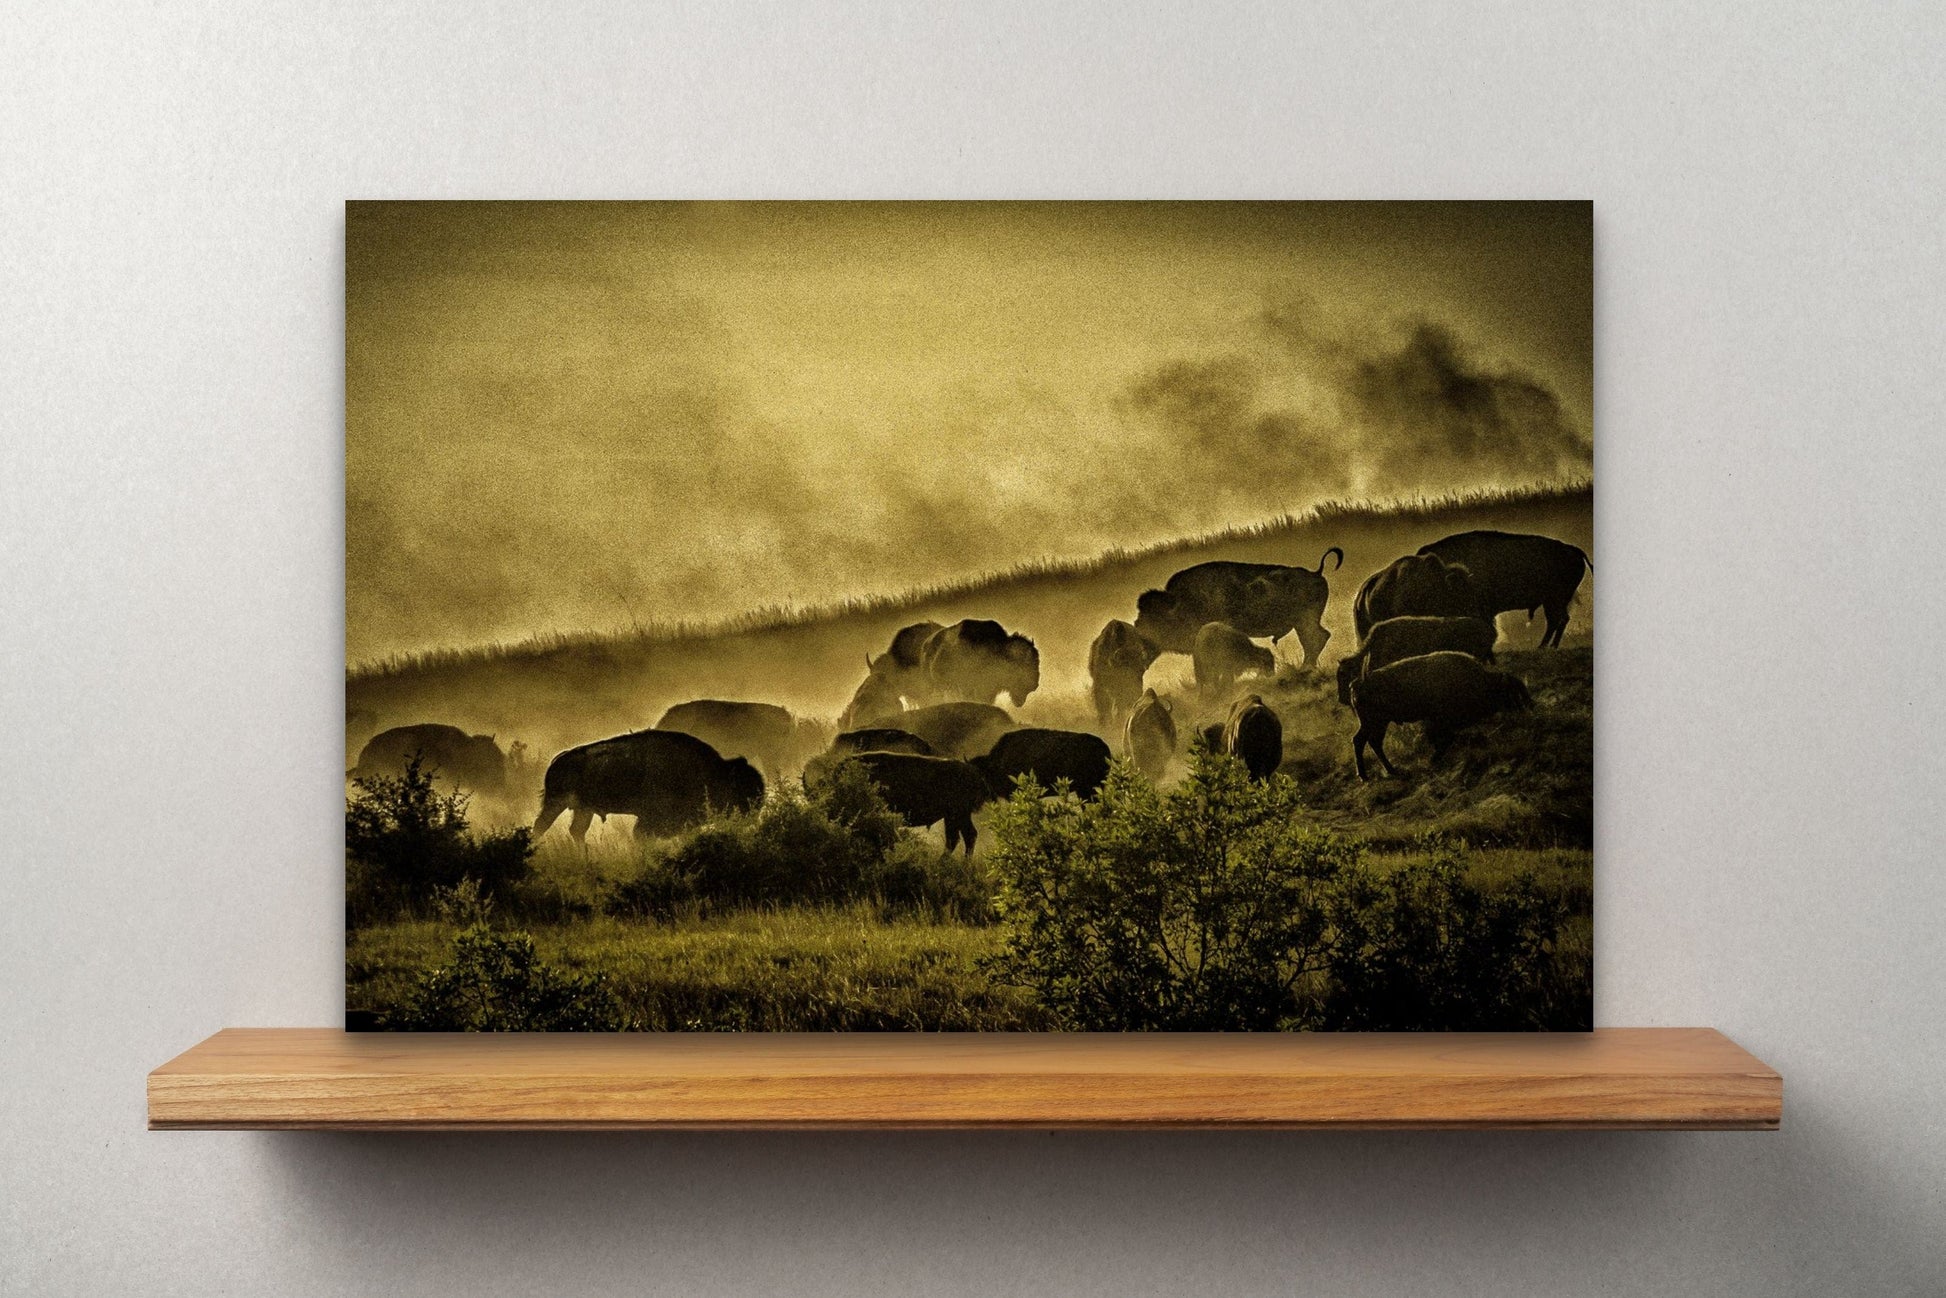 Wimberley Puzzle Company Posters, Prints, & Visual Artwork 16x24" Buffalos, Roosevelt National Park, North Dakota Wooden Art and Postcards